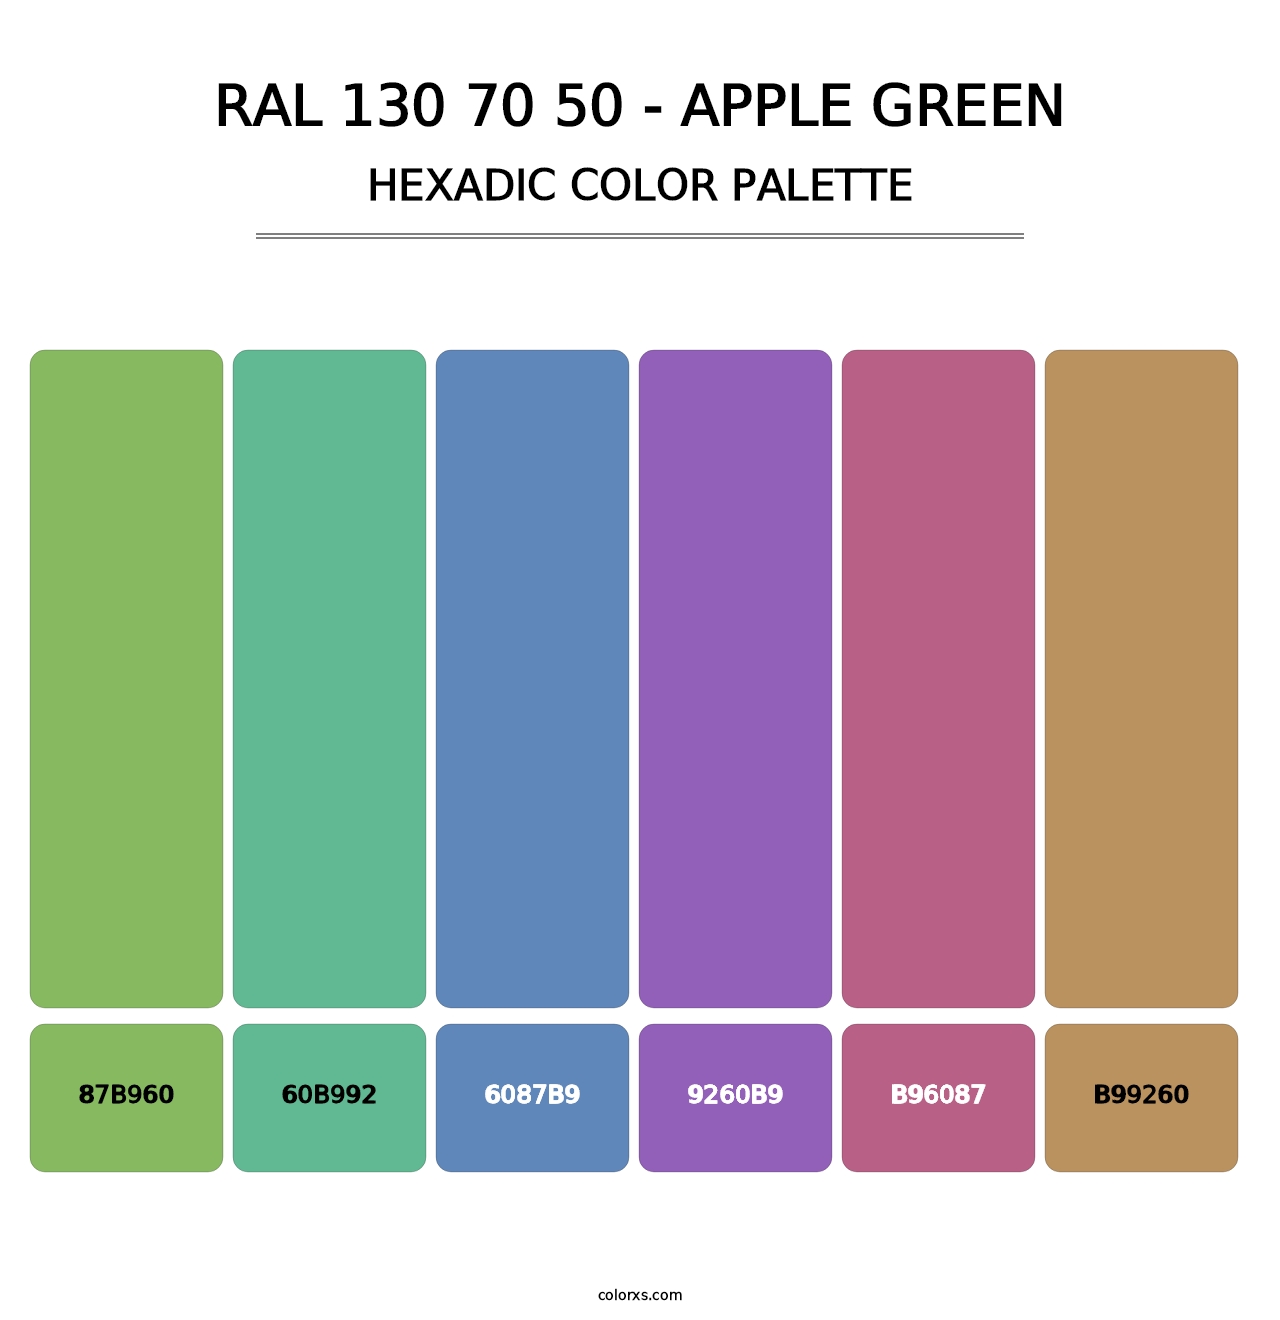 RAL 130 70 50 - Apple Green - Hexadic Color Palette